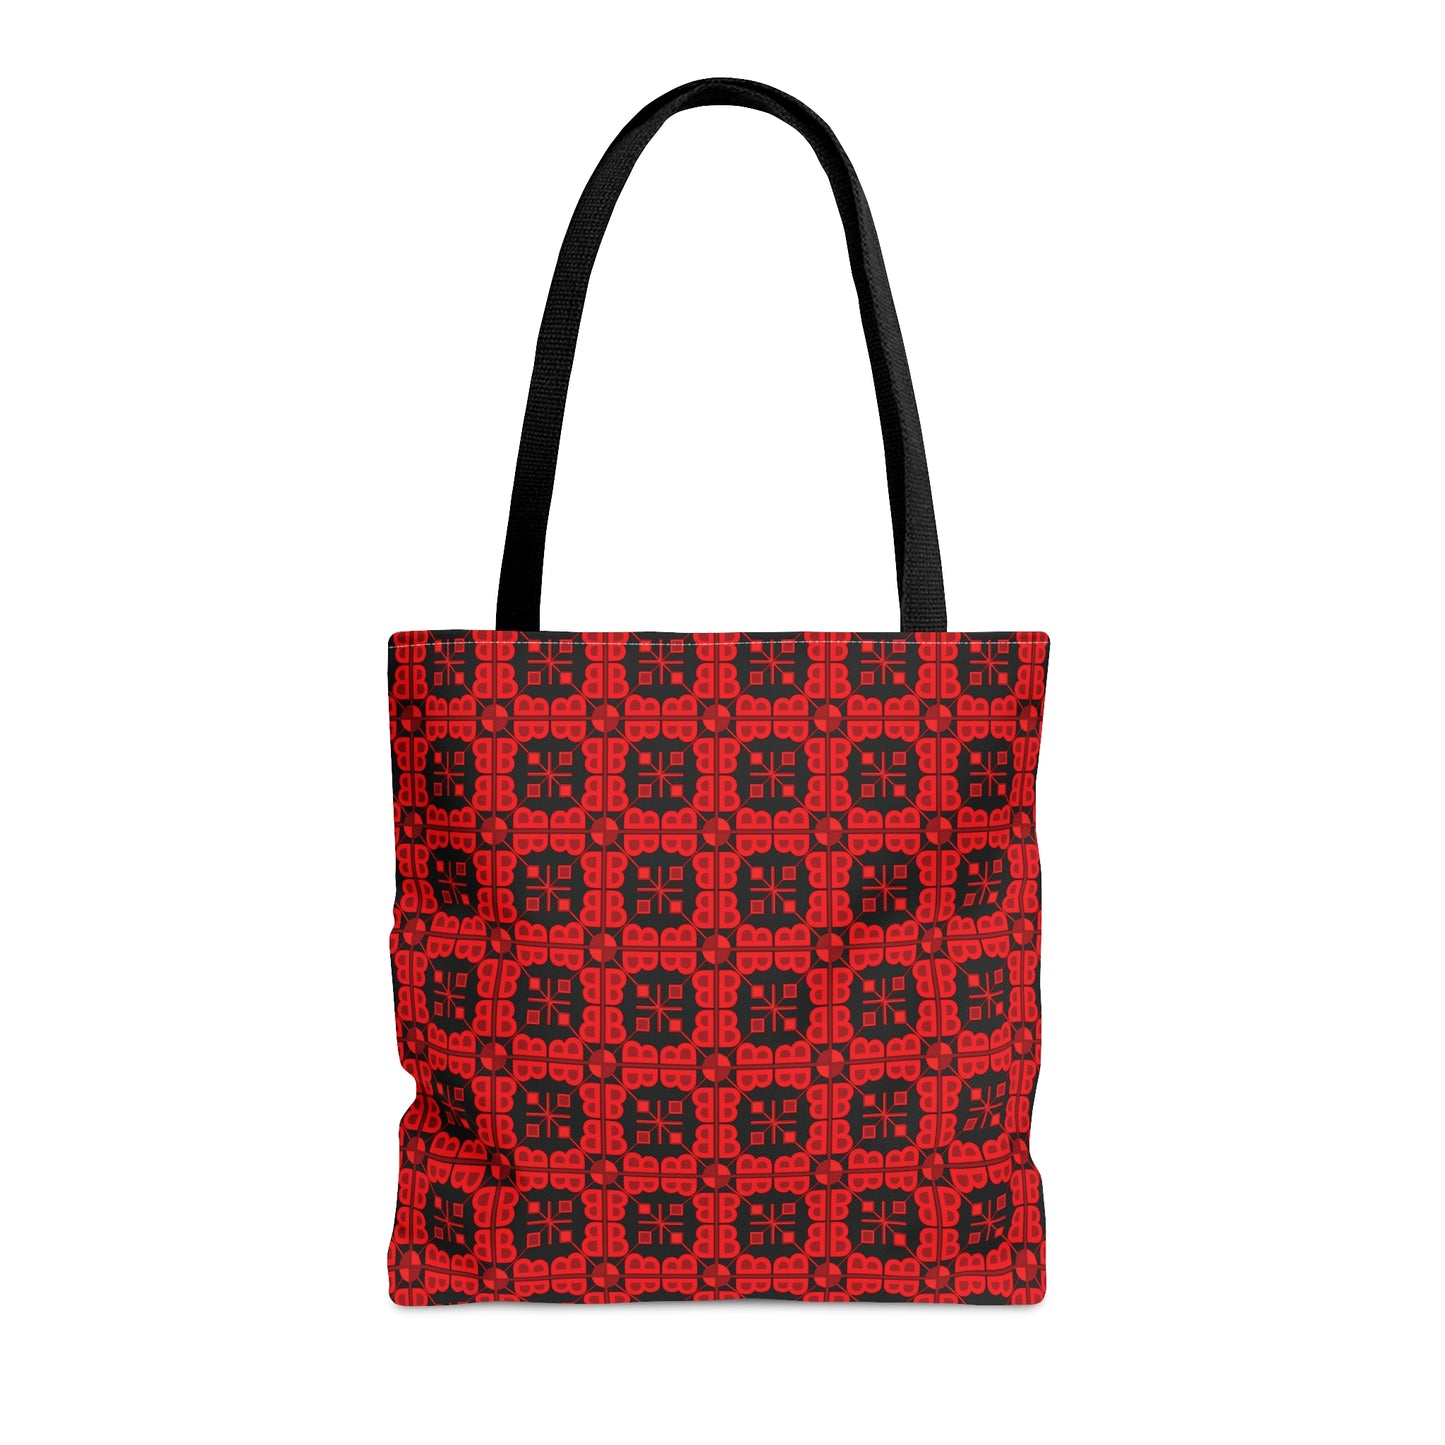 Letter Art - B - Red - Black 000000 - Tote Bag